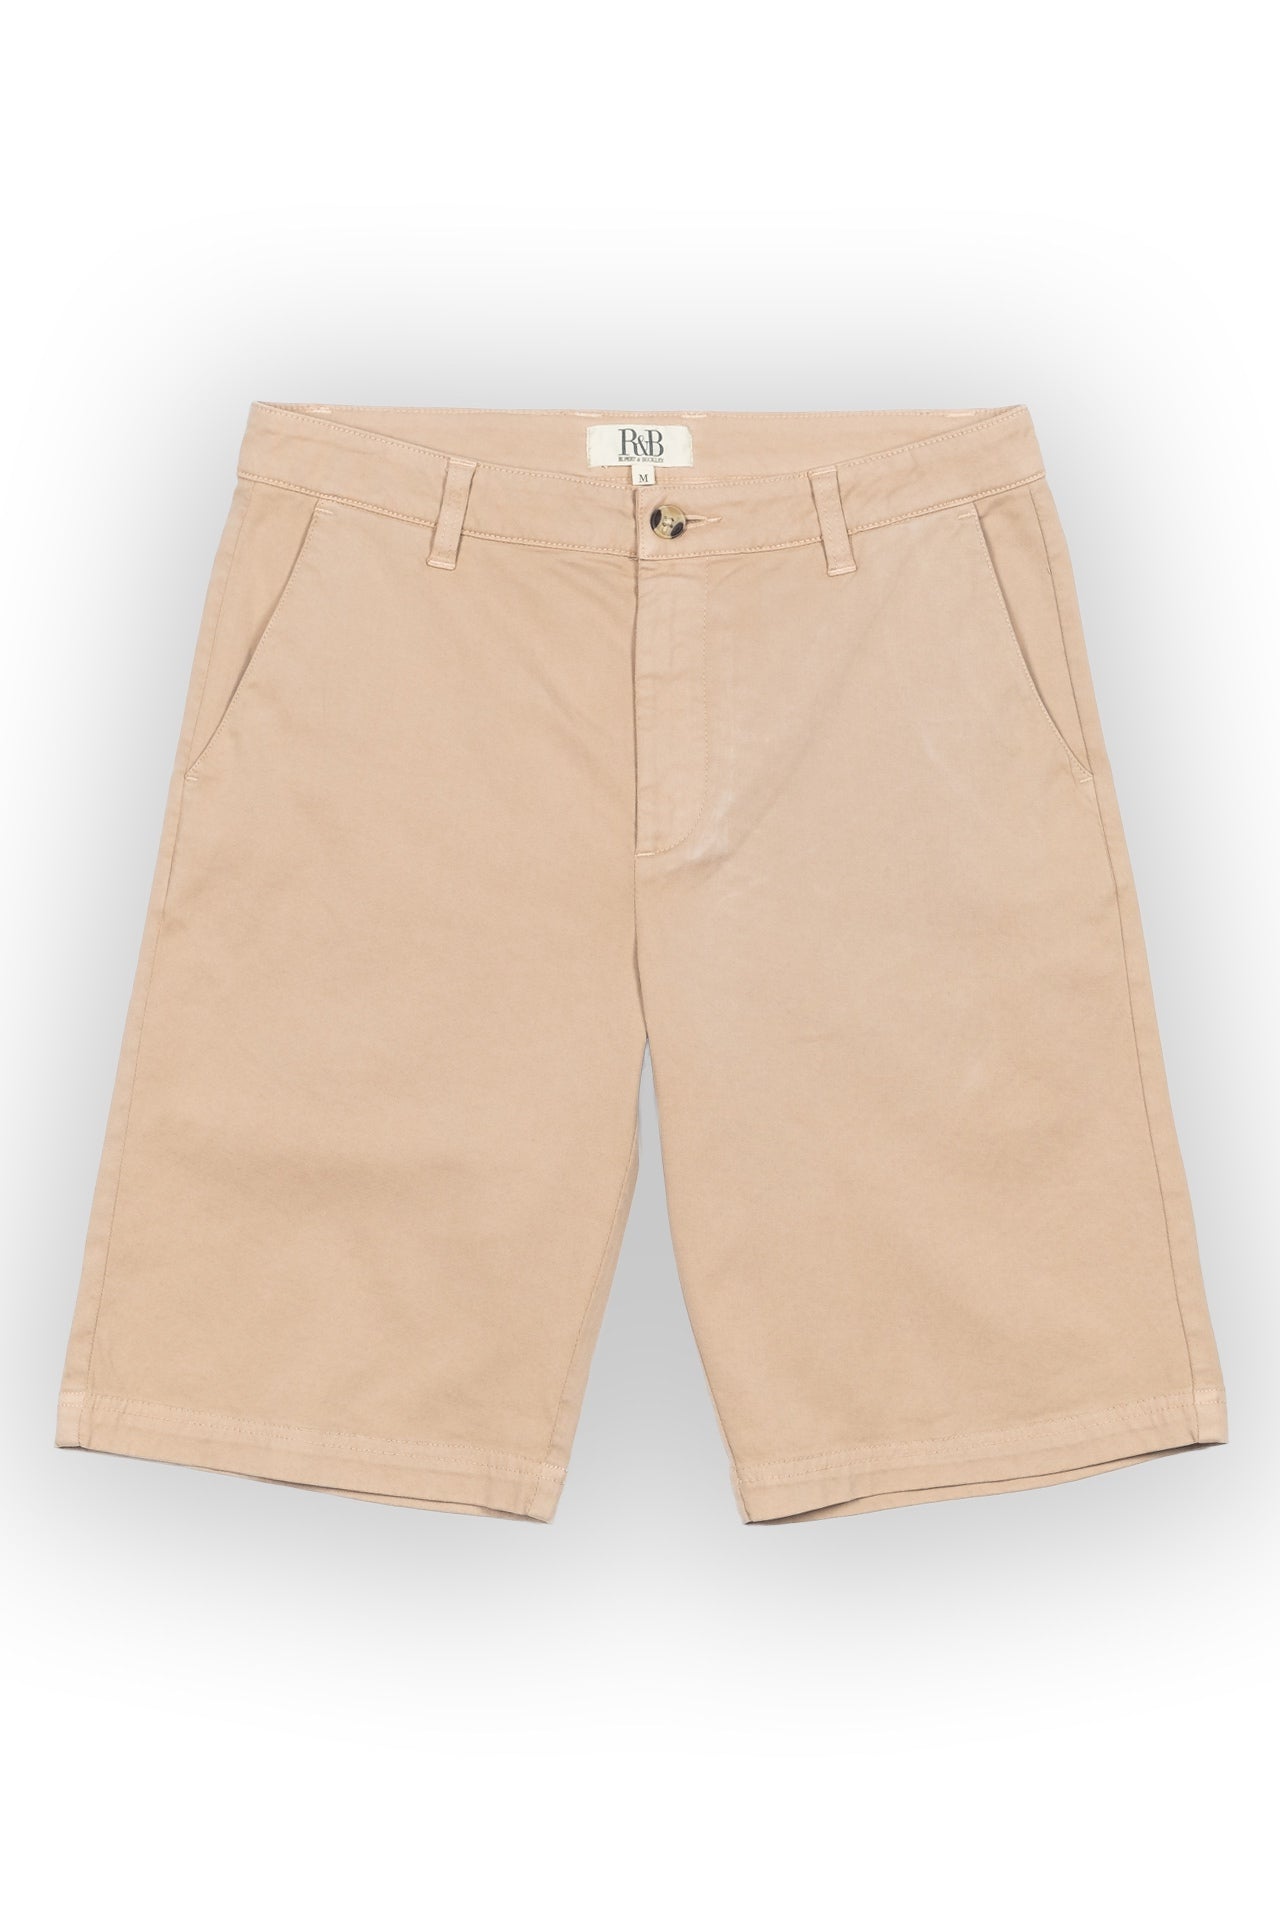 Spencer Sand Chino Shorts - Rupert and Buckley - Shorts